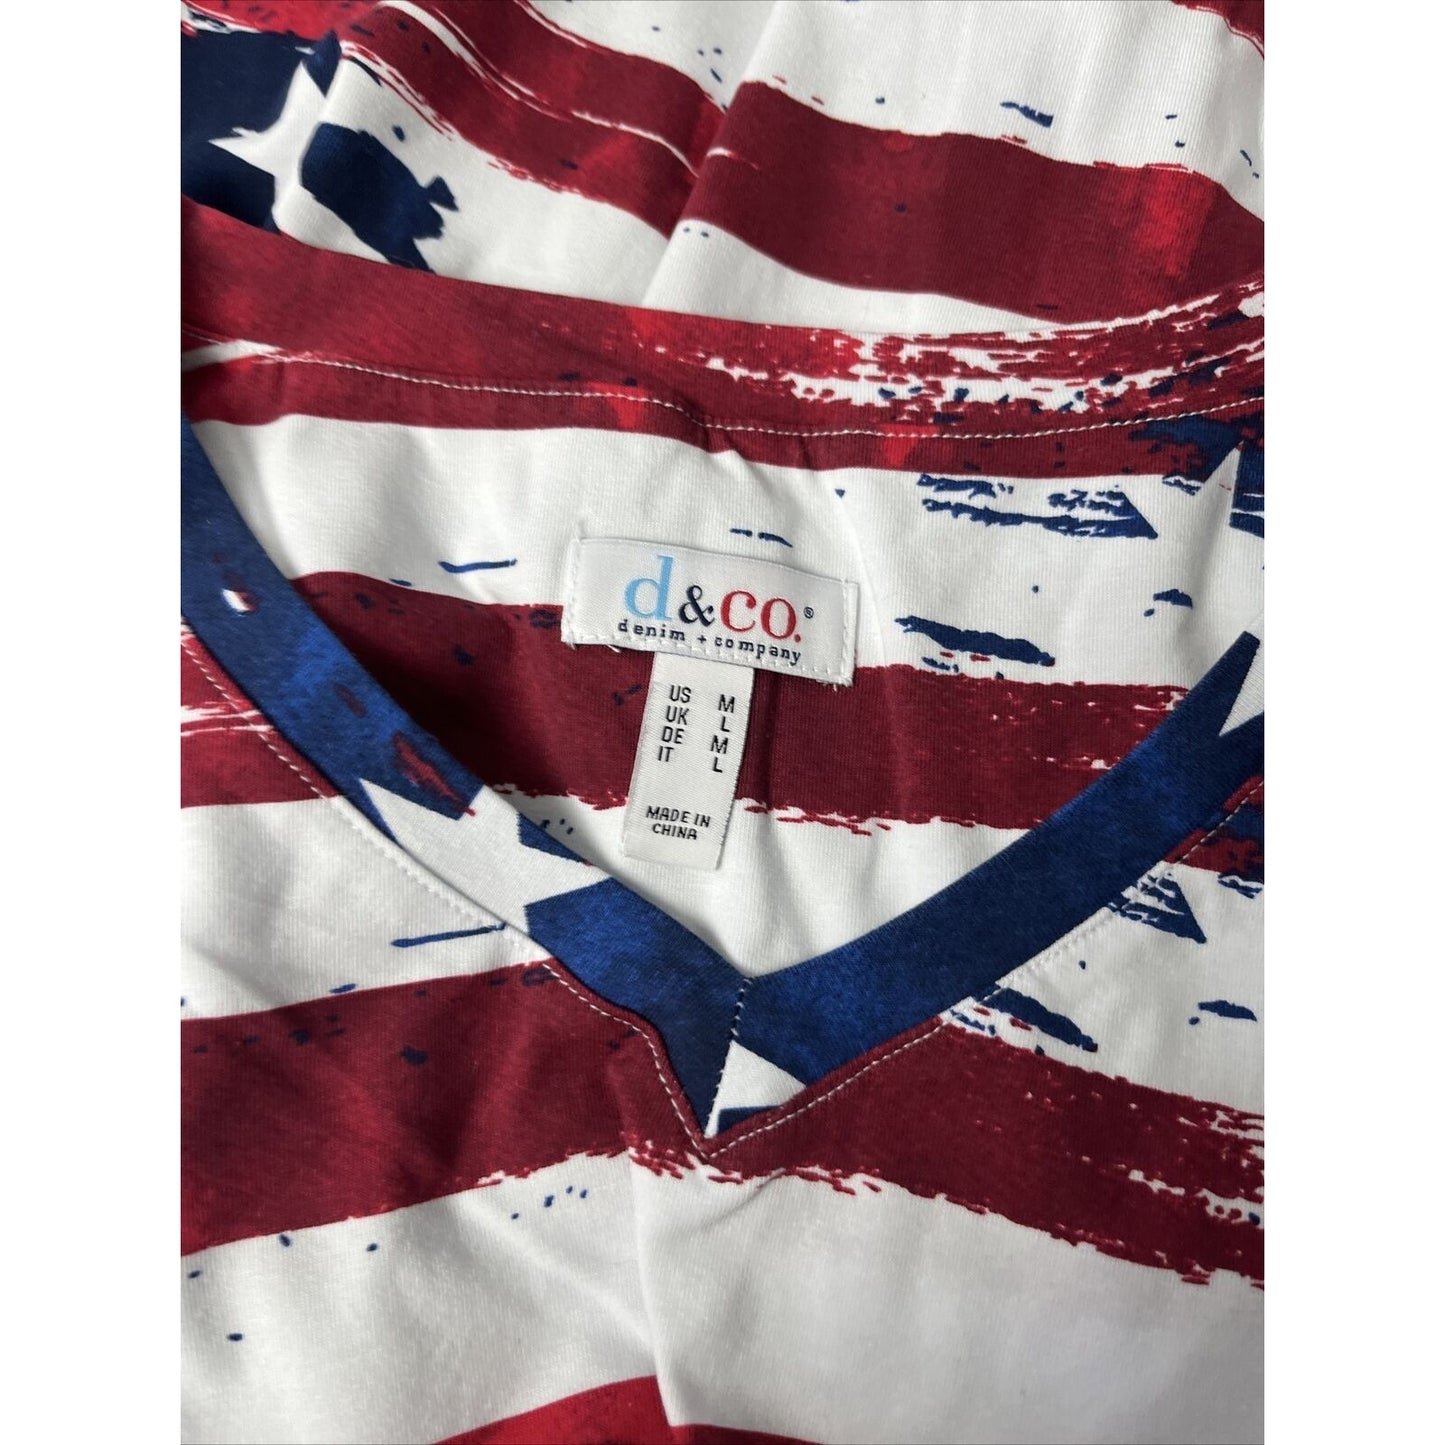 Denim & Co. American Flag Print Short Sleeve V-Neck Top Navy/Red M A291647